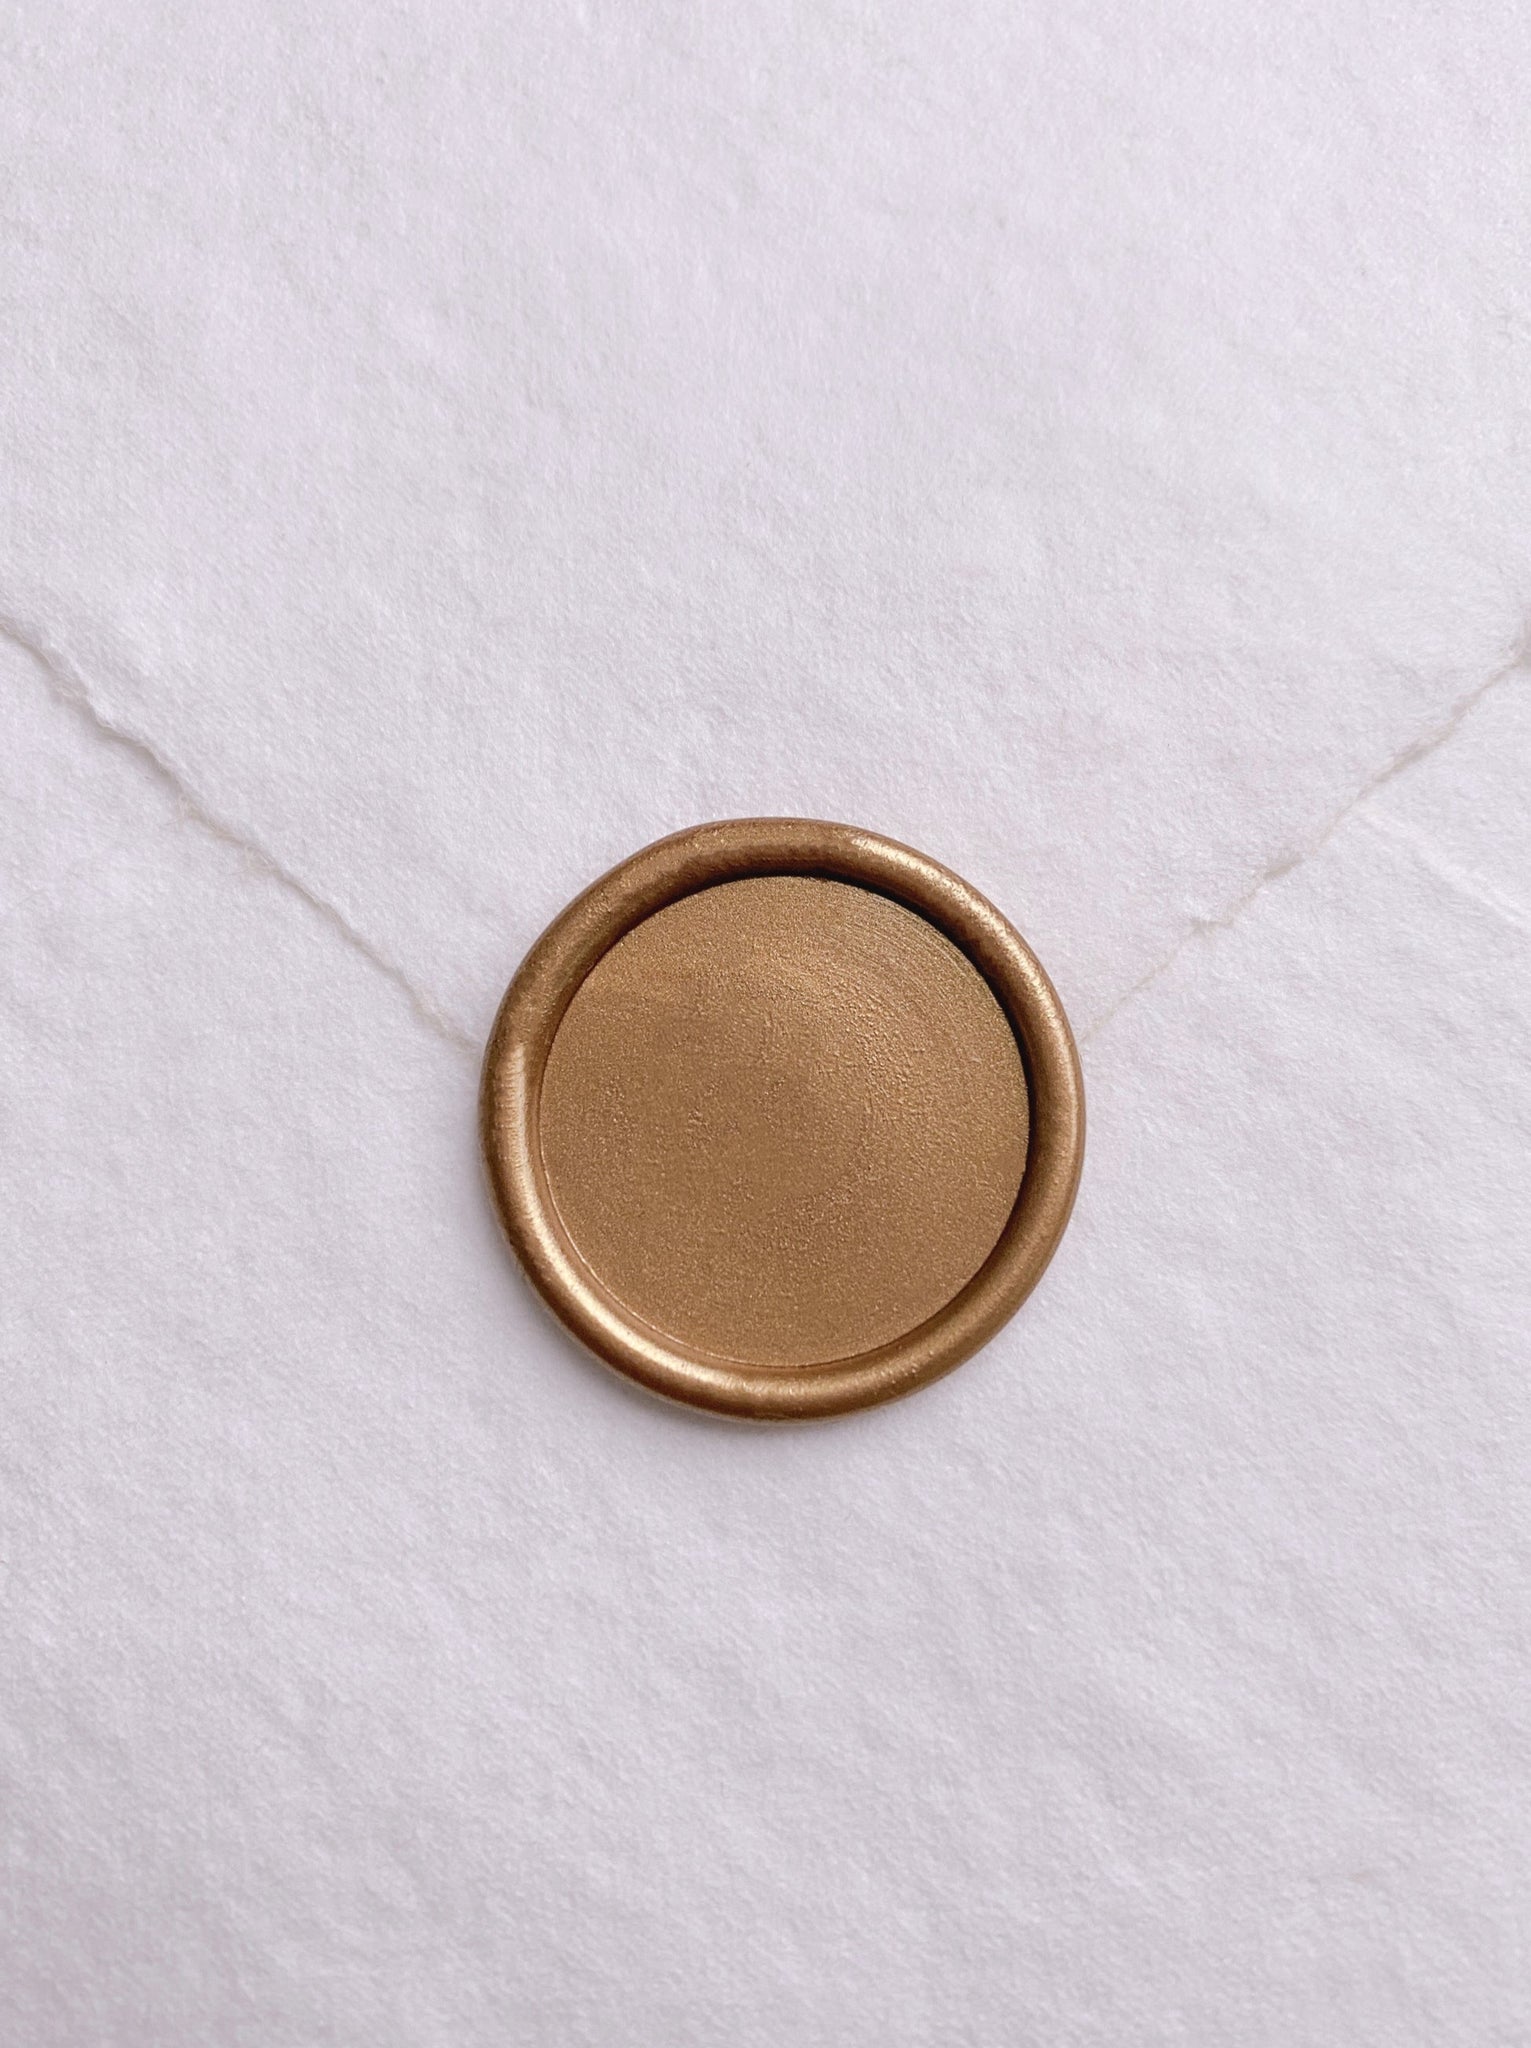 Round blank gold wax seal on white handmade paper envelope